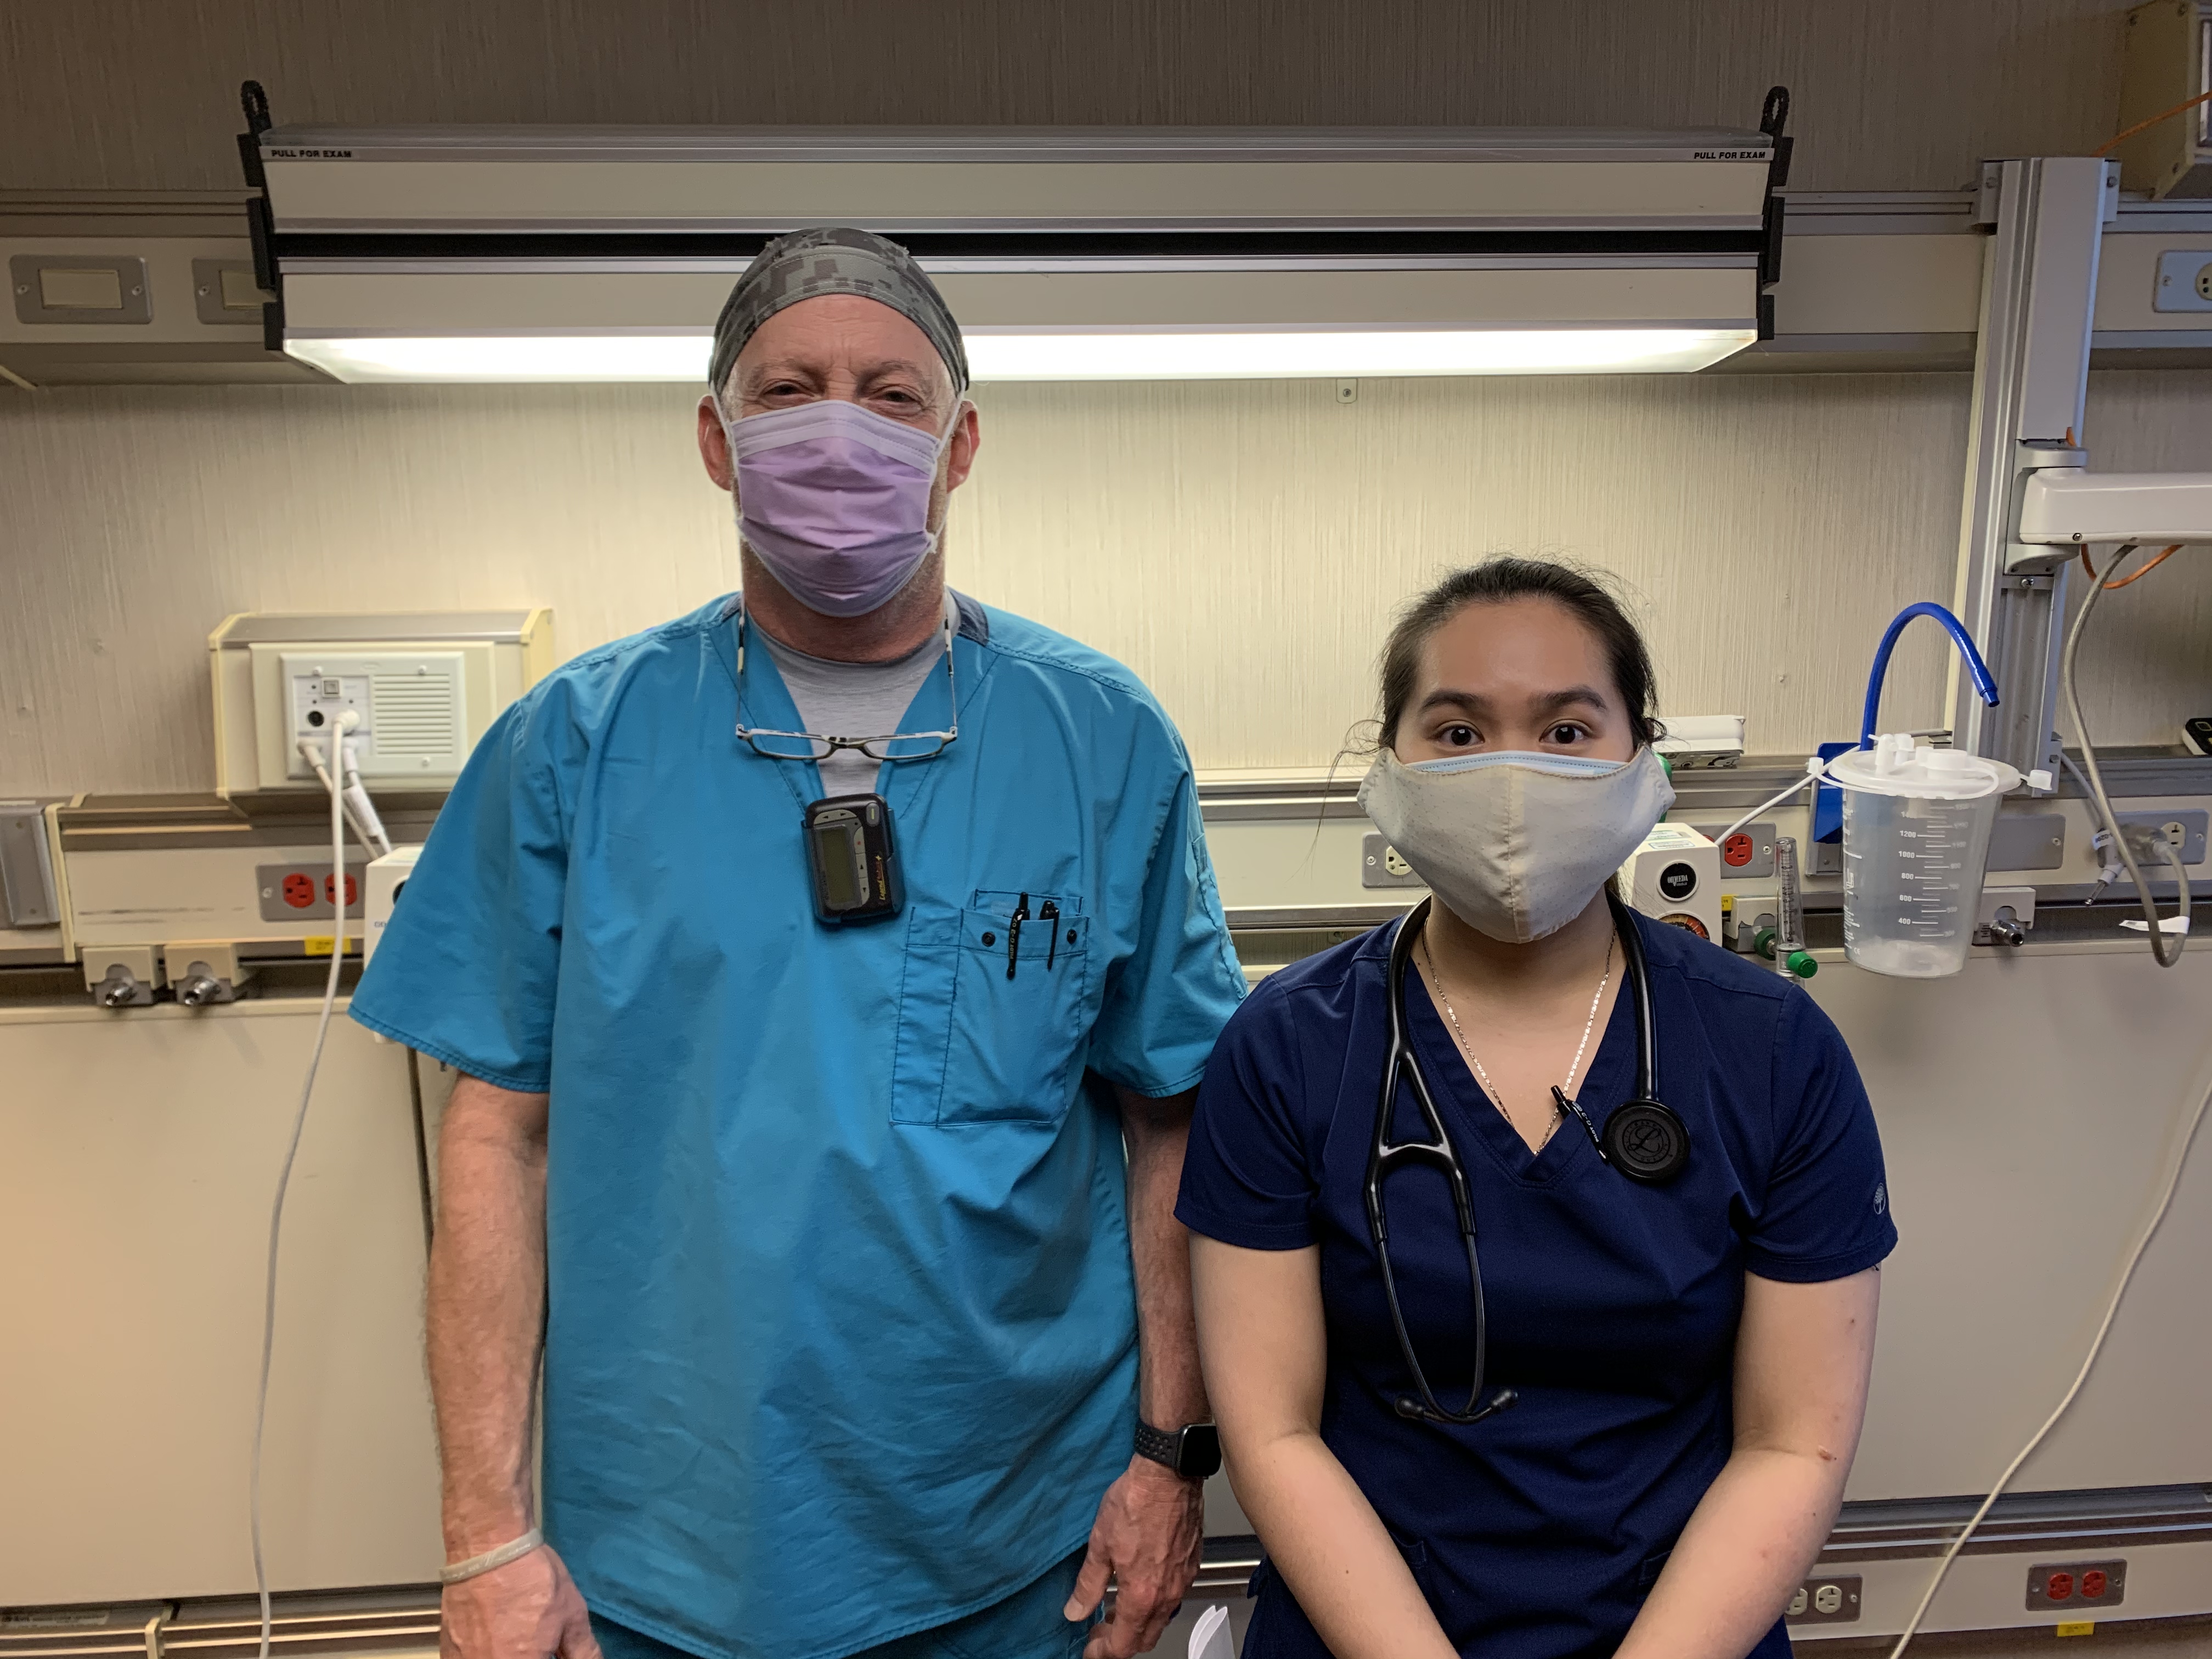 Doctor and nurse standing together wearing masks